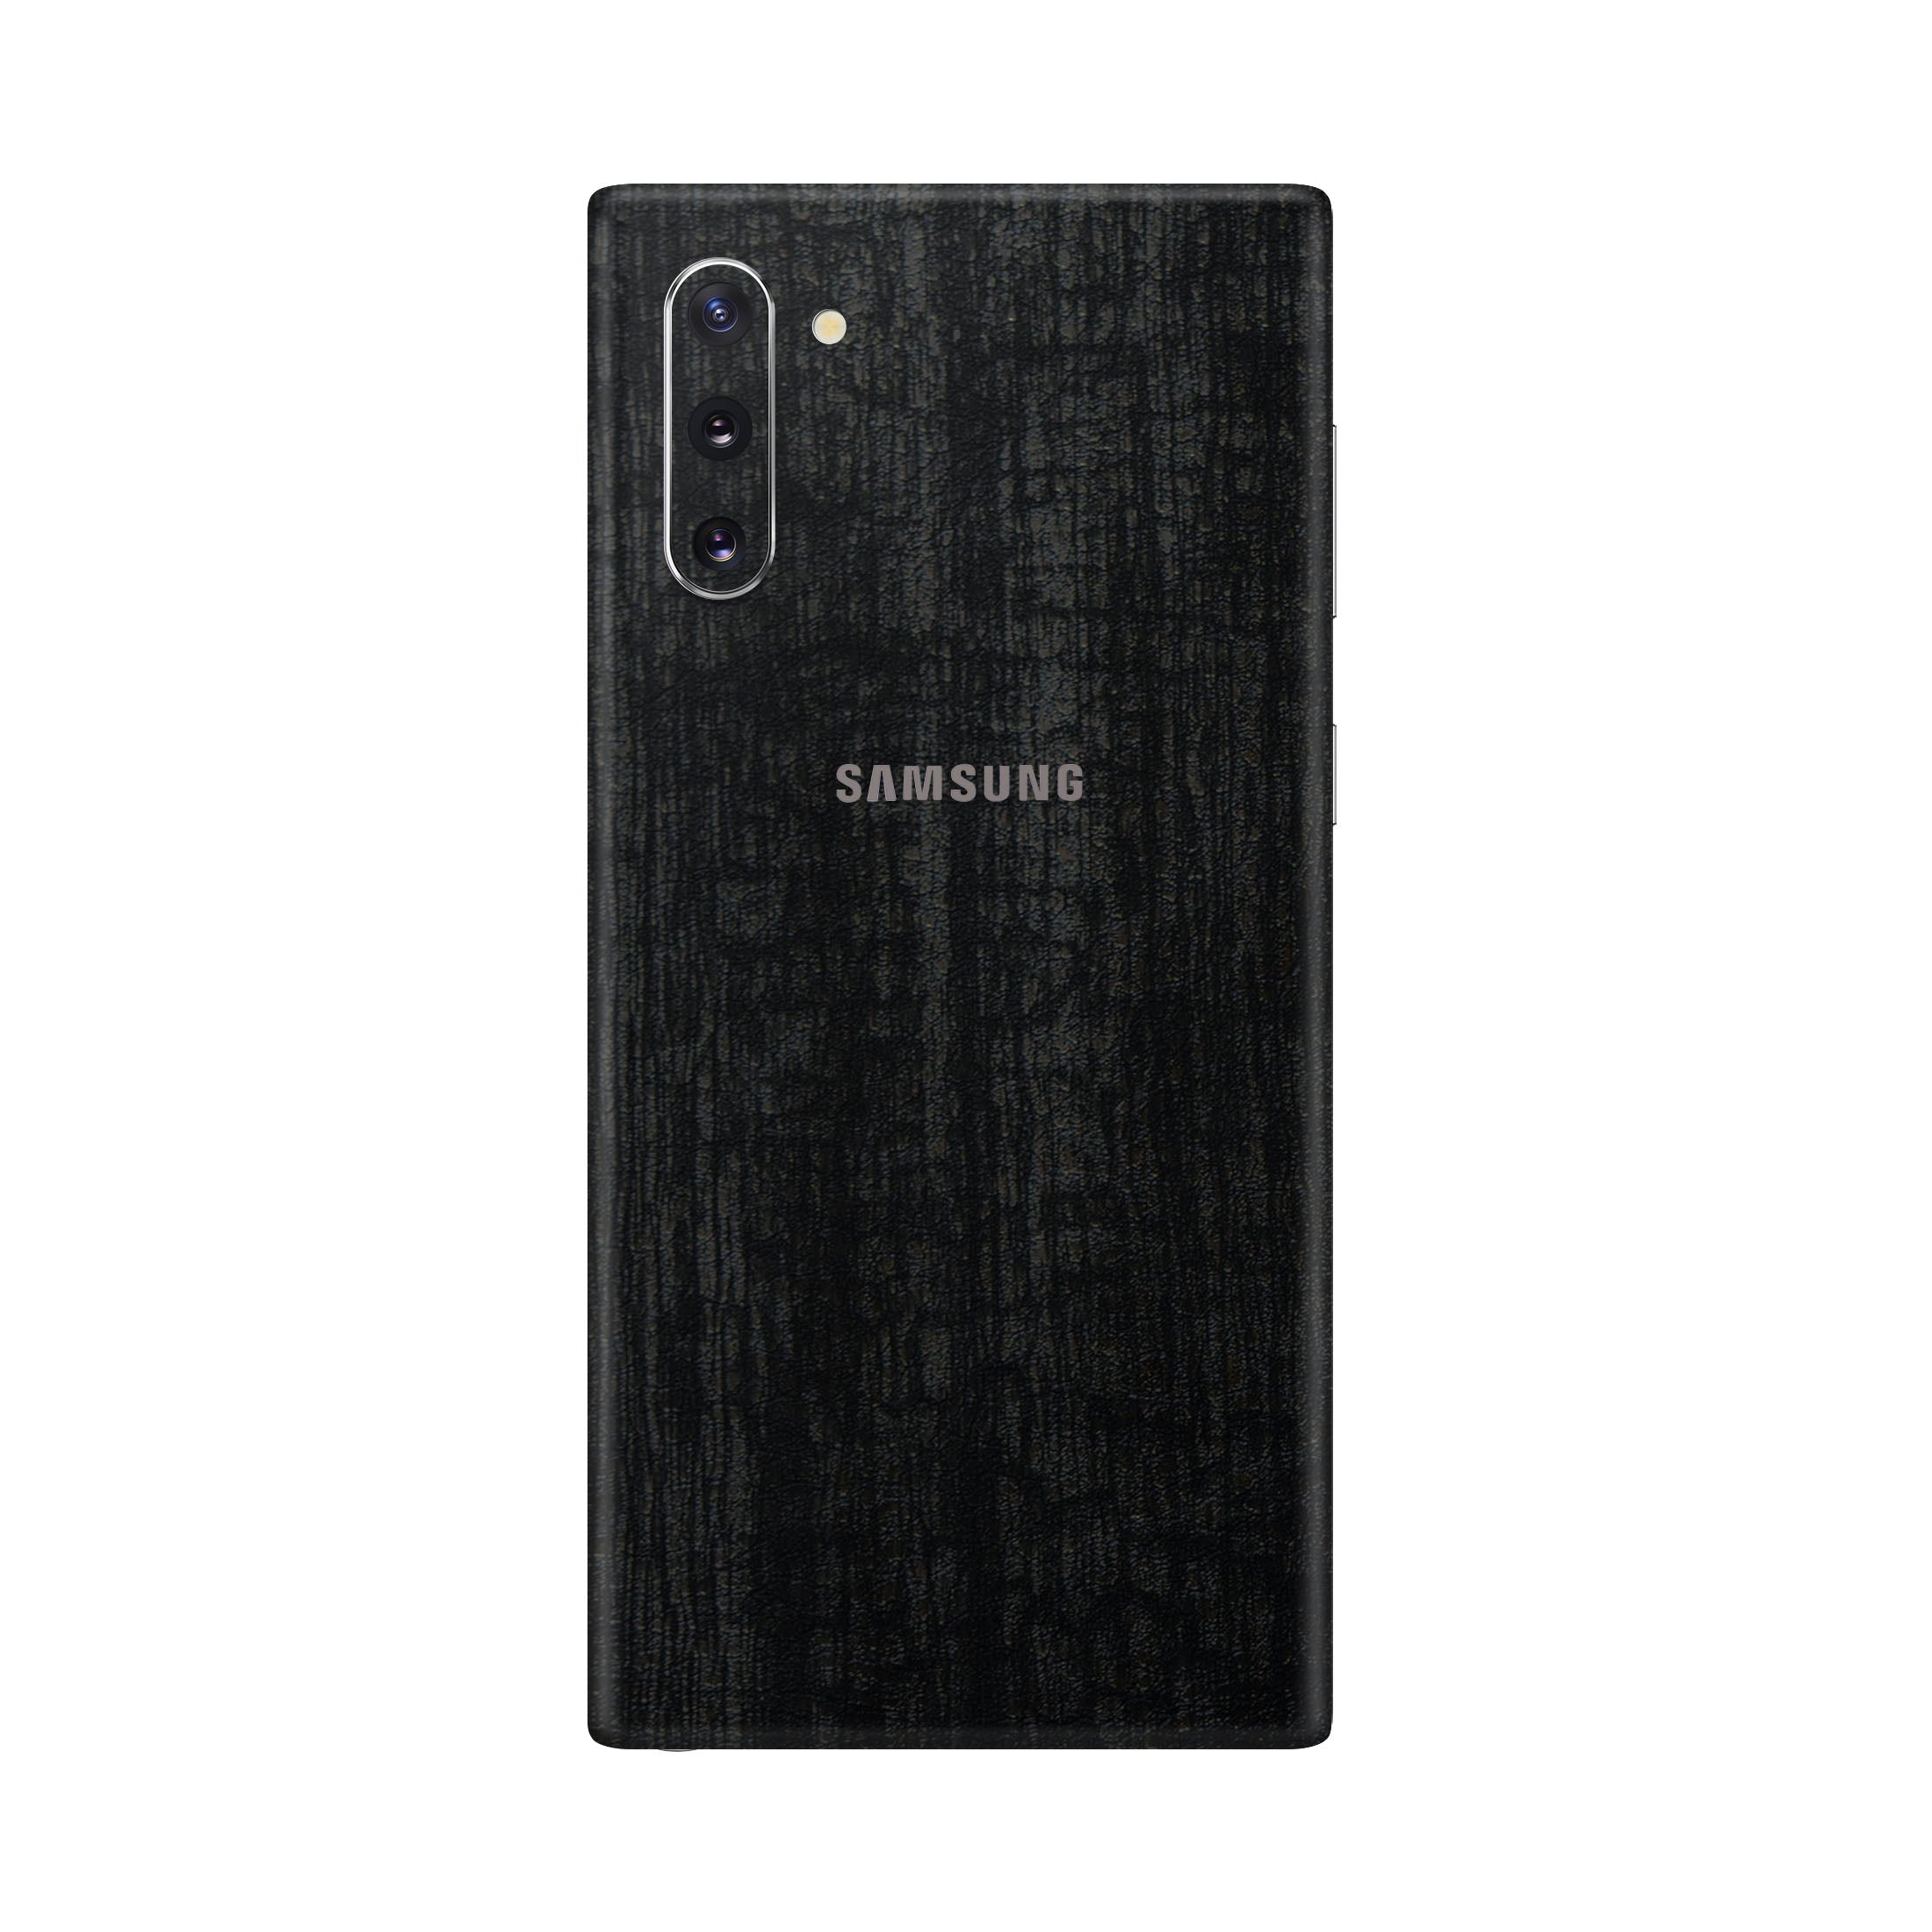 Dragon Black Skin for Samsung Note 10